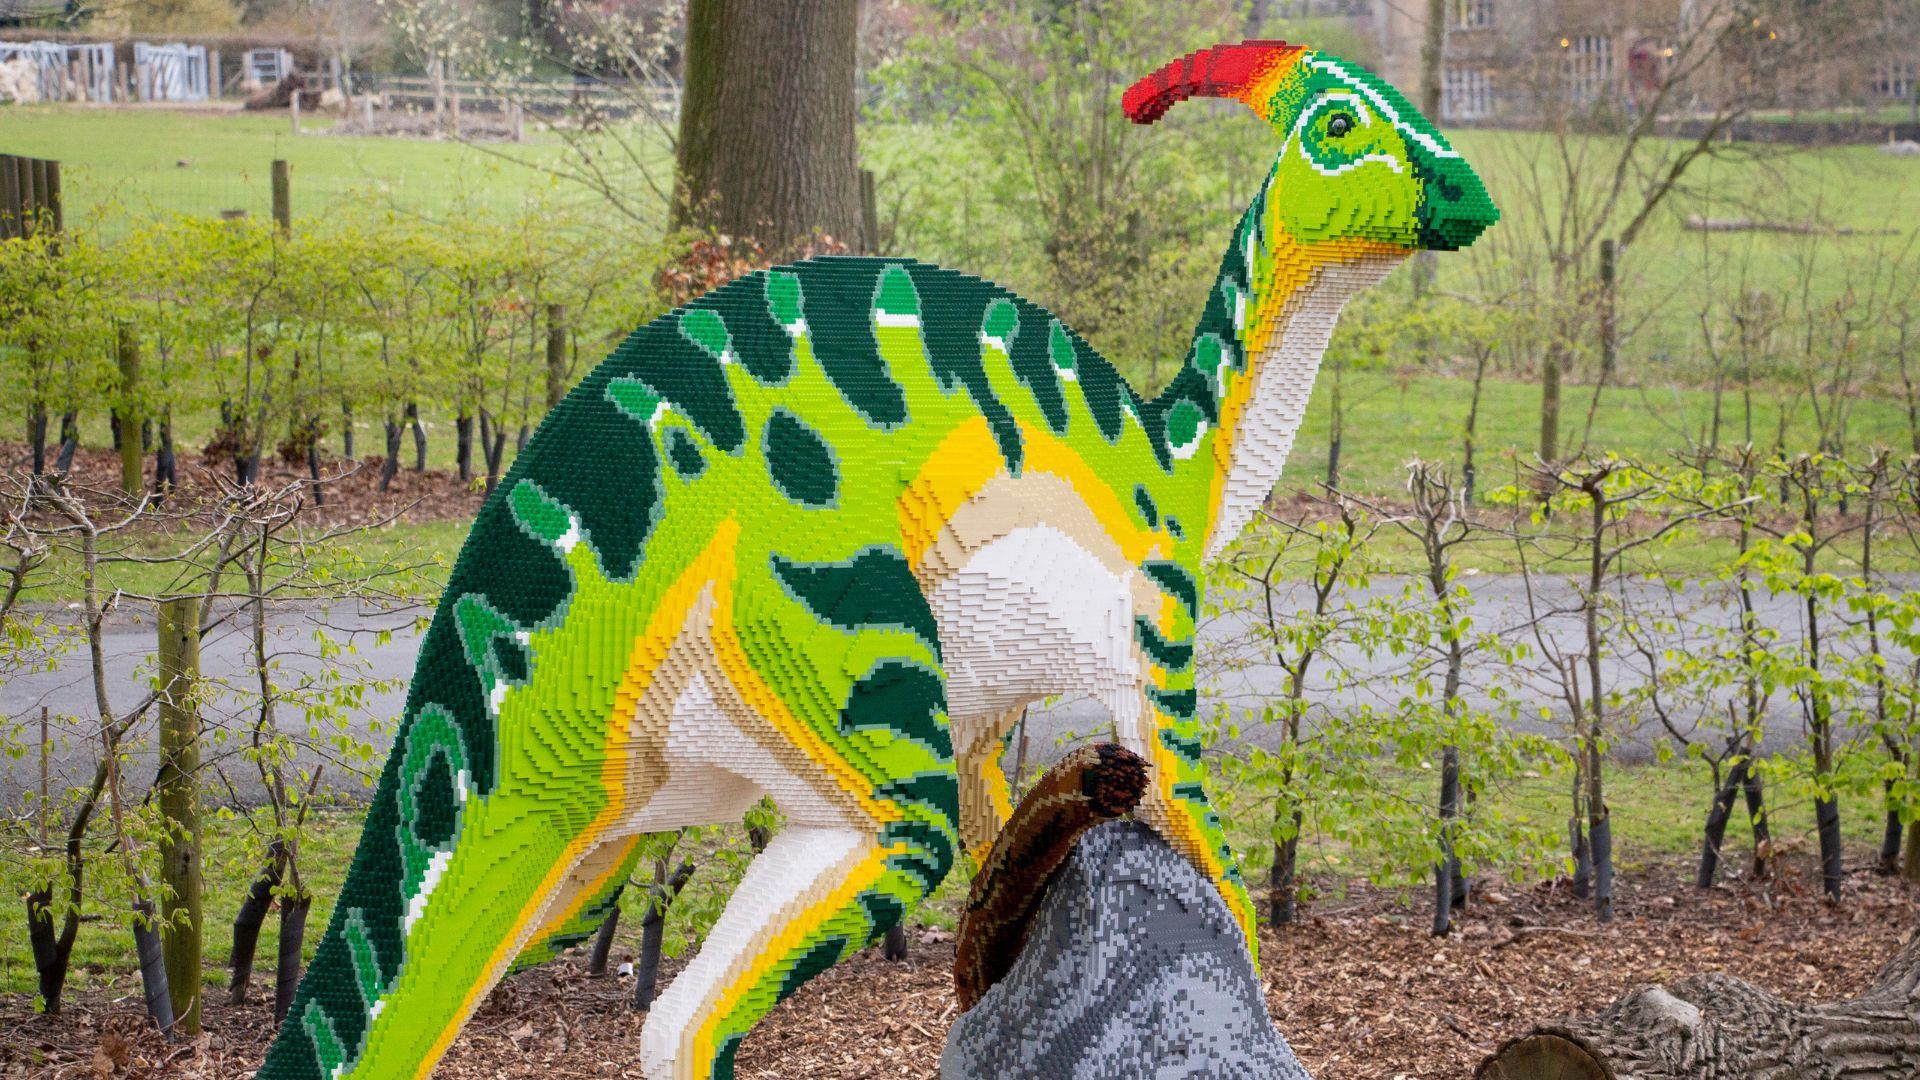 Toy brick dinosaur